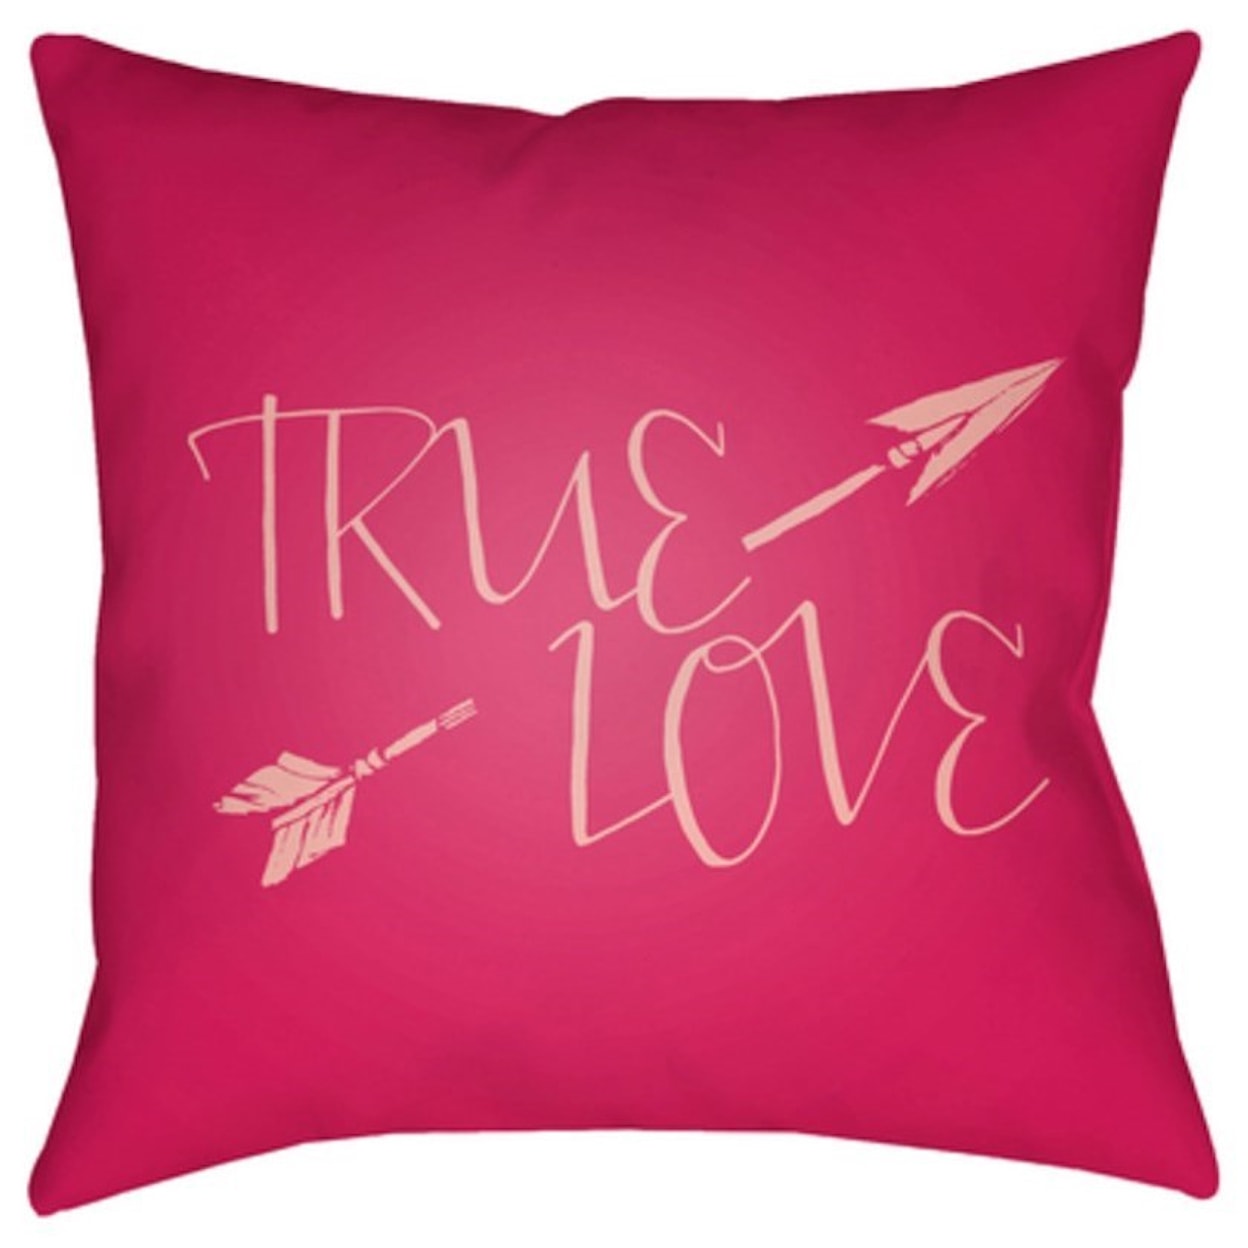 Surya True Love Pillow